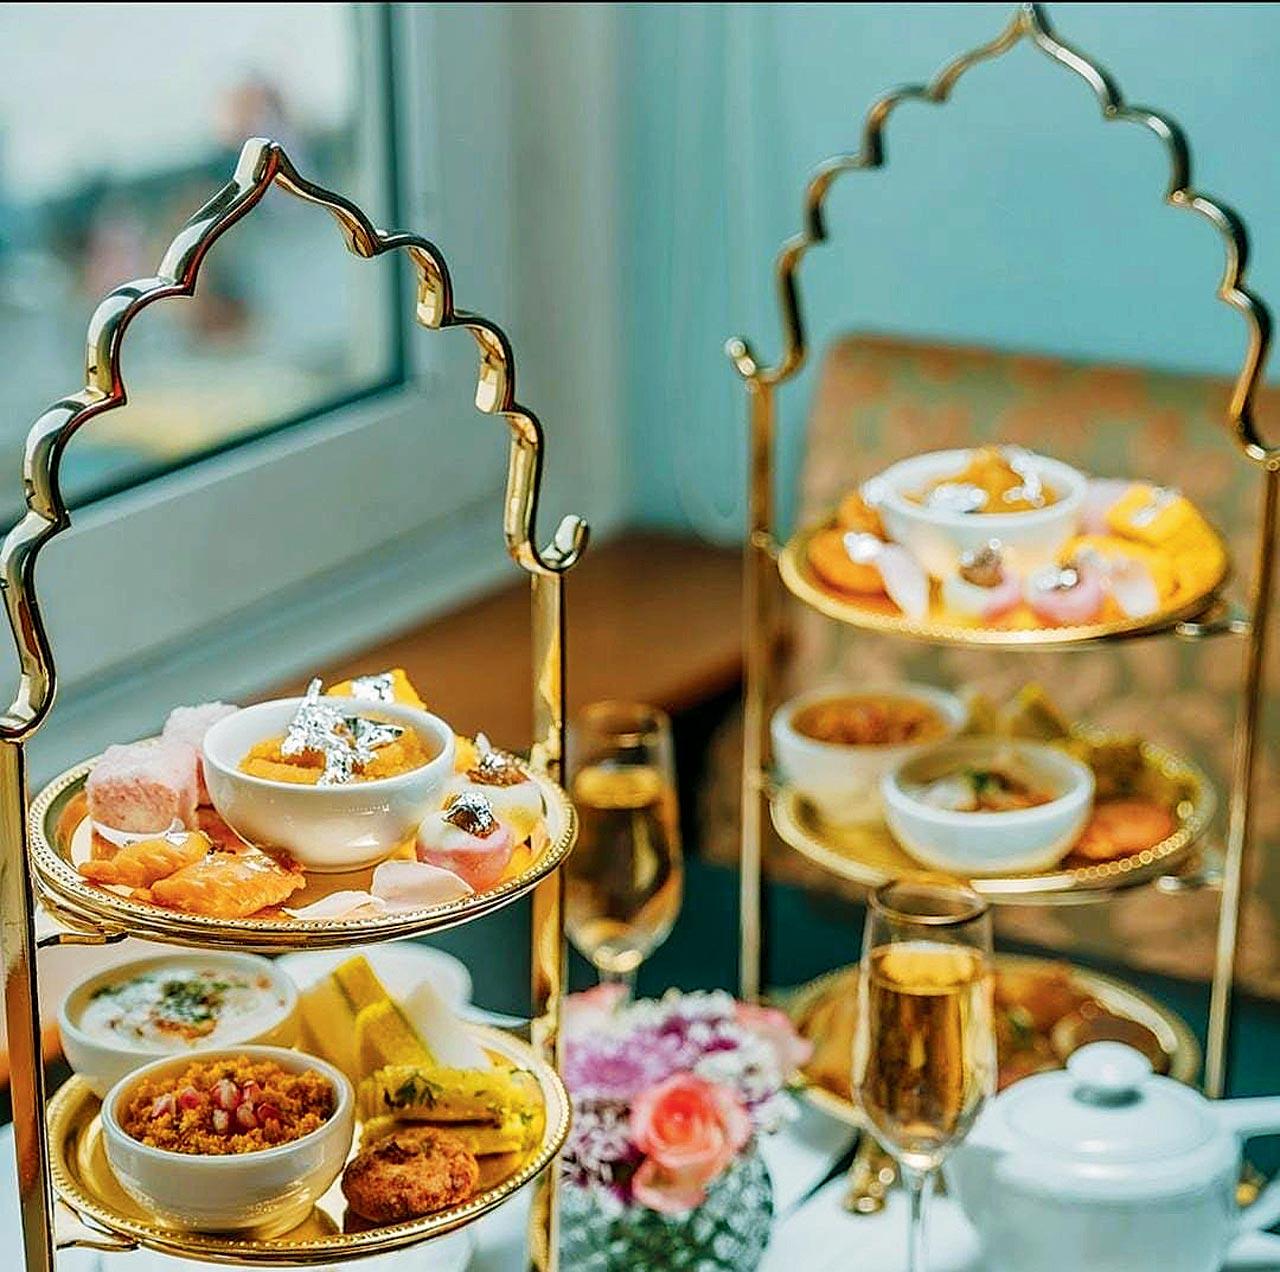 The high tea spread at Taj Mahal Palace. Pic Courtesy/Instagram